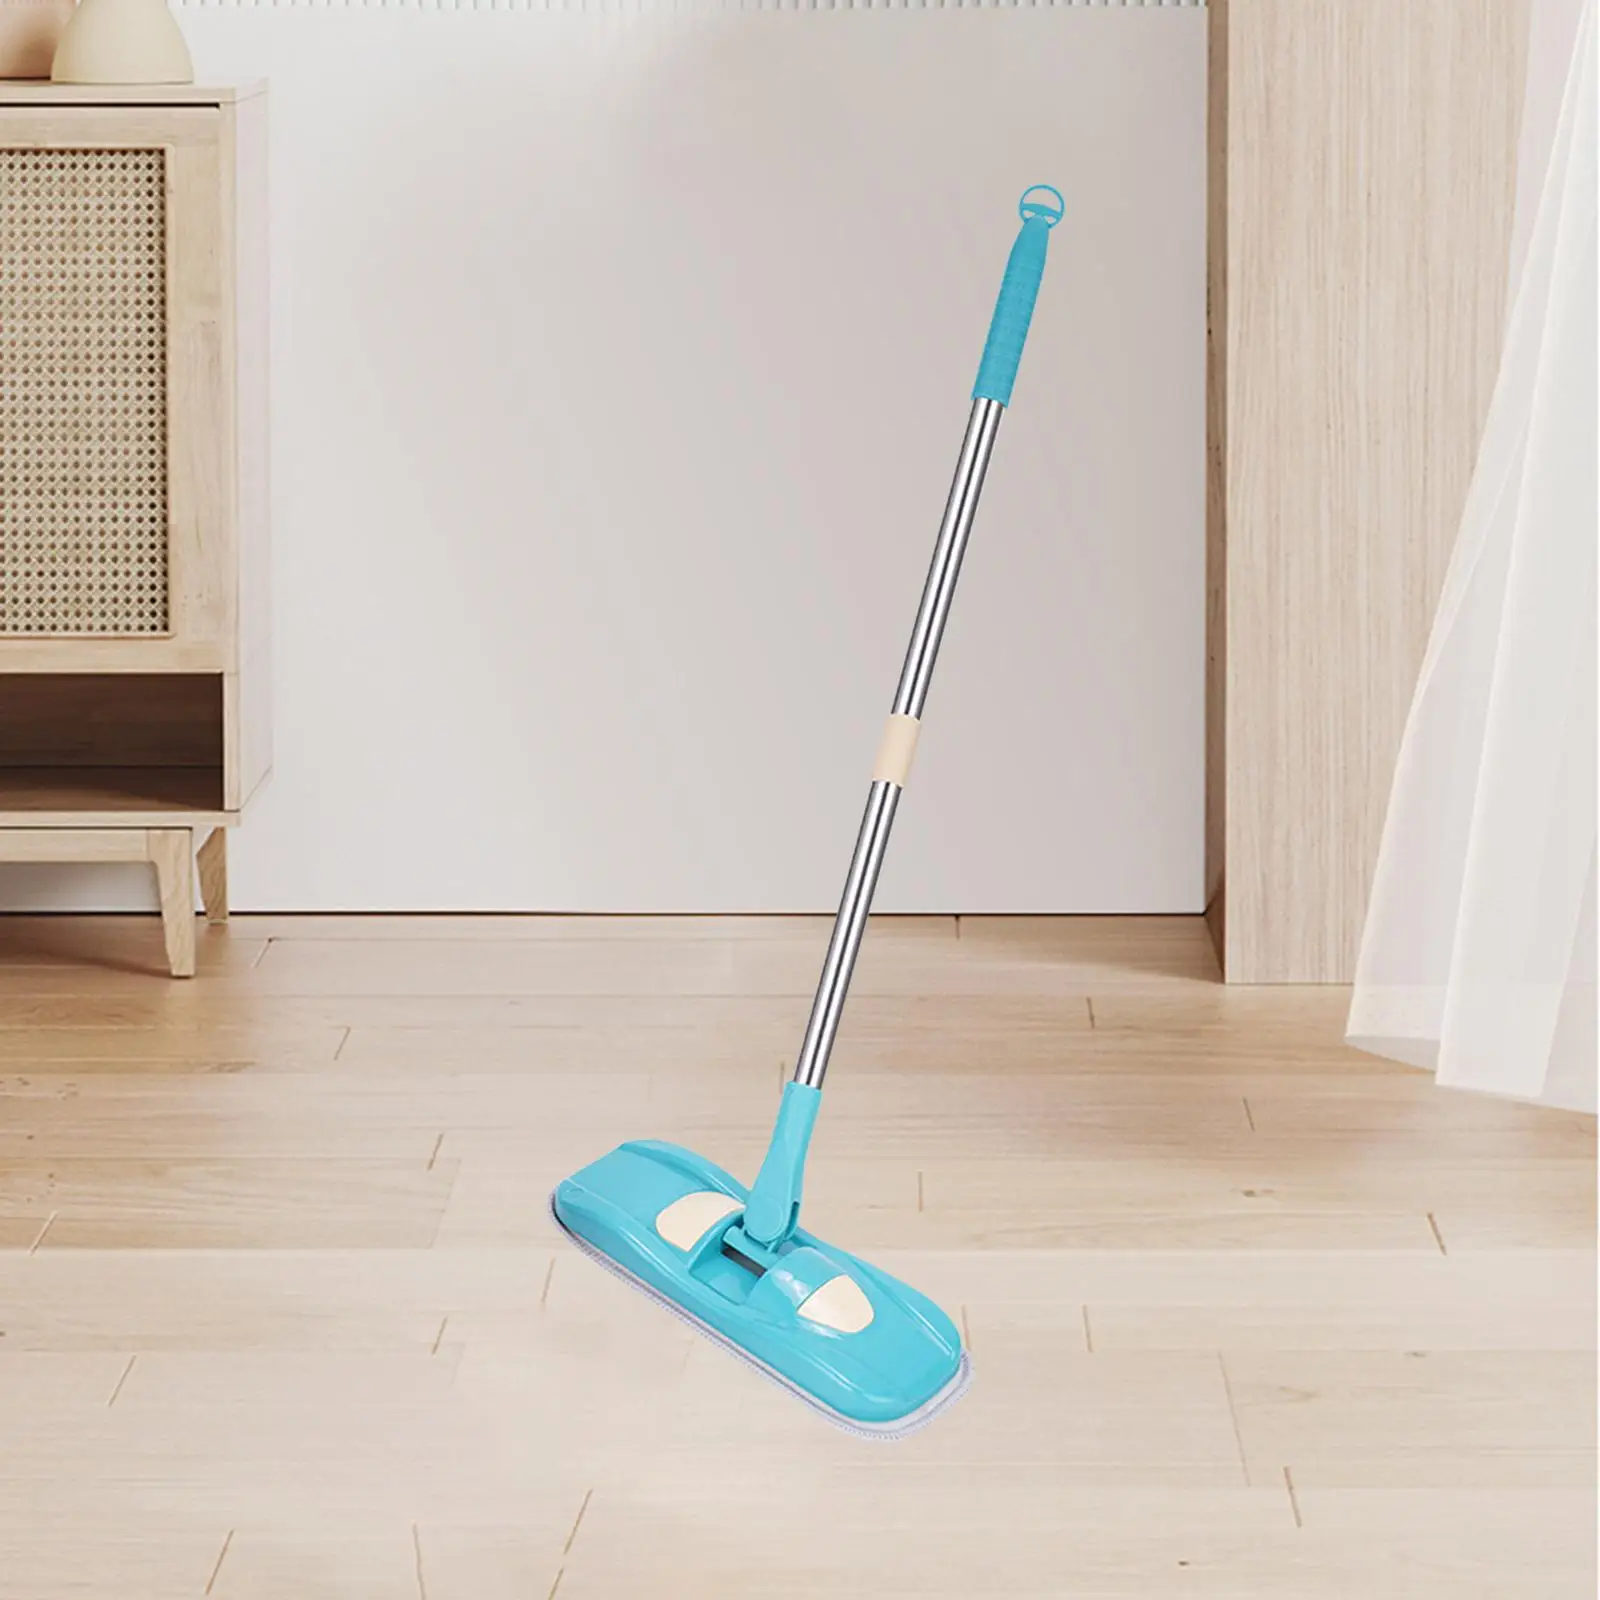 Small Mop Pretend Play Little Housekeeping Helper Tool for Preschool Age 3-6